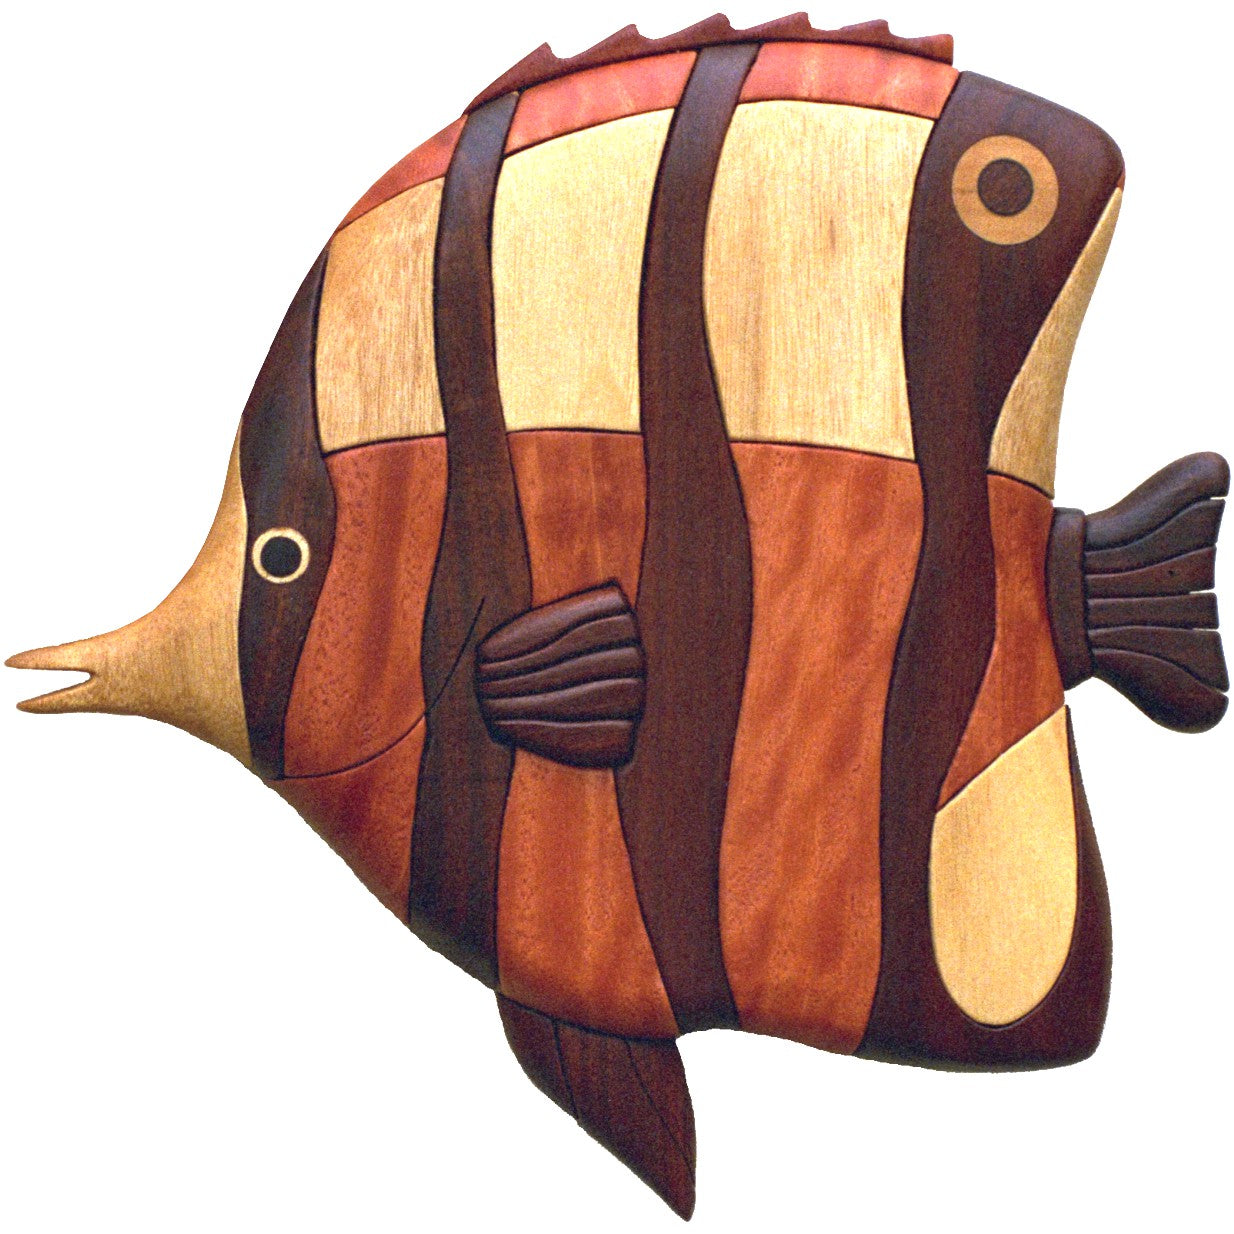 Single Angel Fish scrollsaw woodworking intarsia pattern